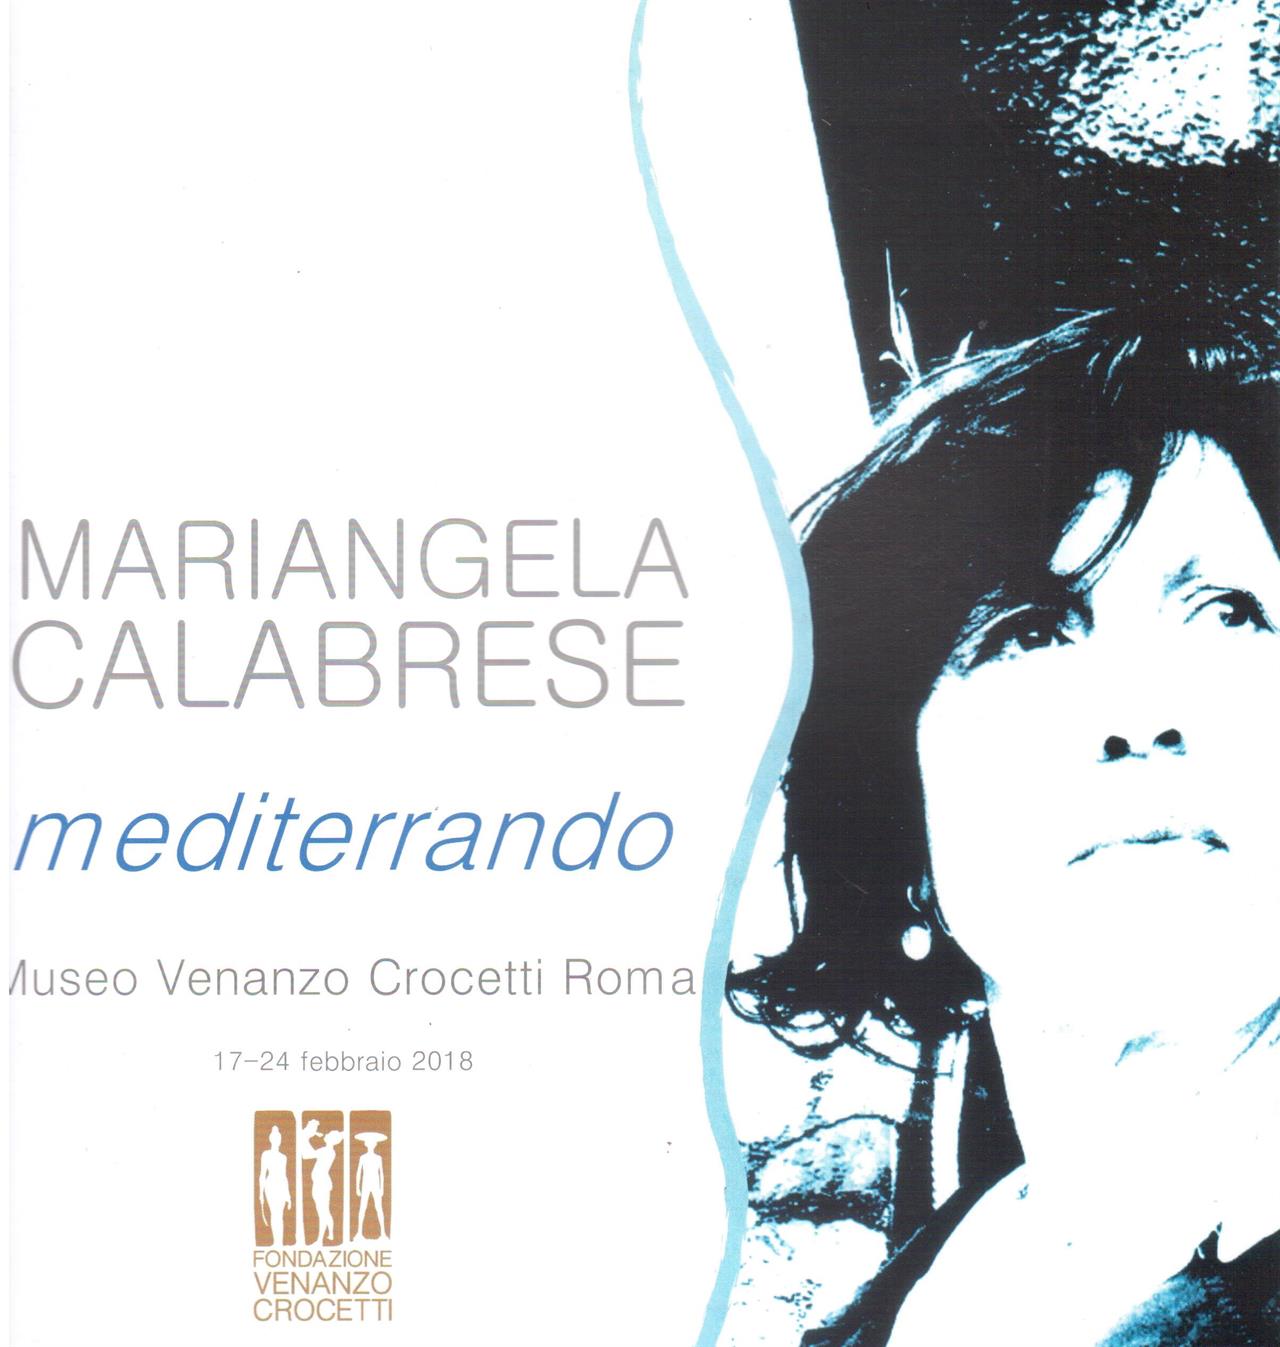 Mariangela Calabrese. Mediterrando